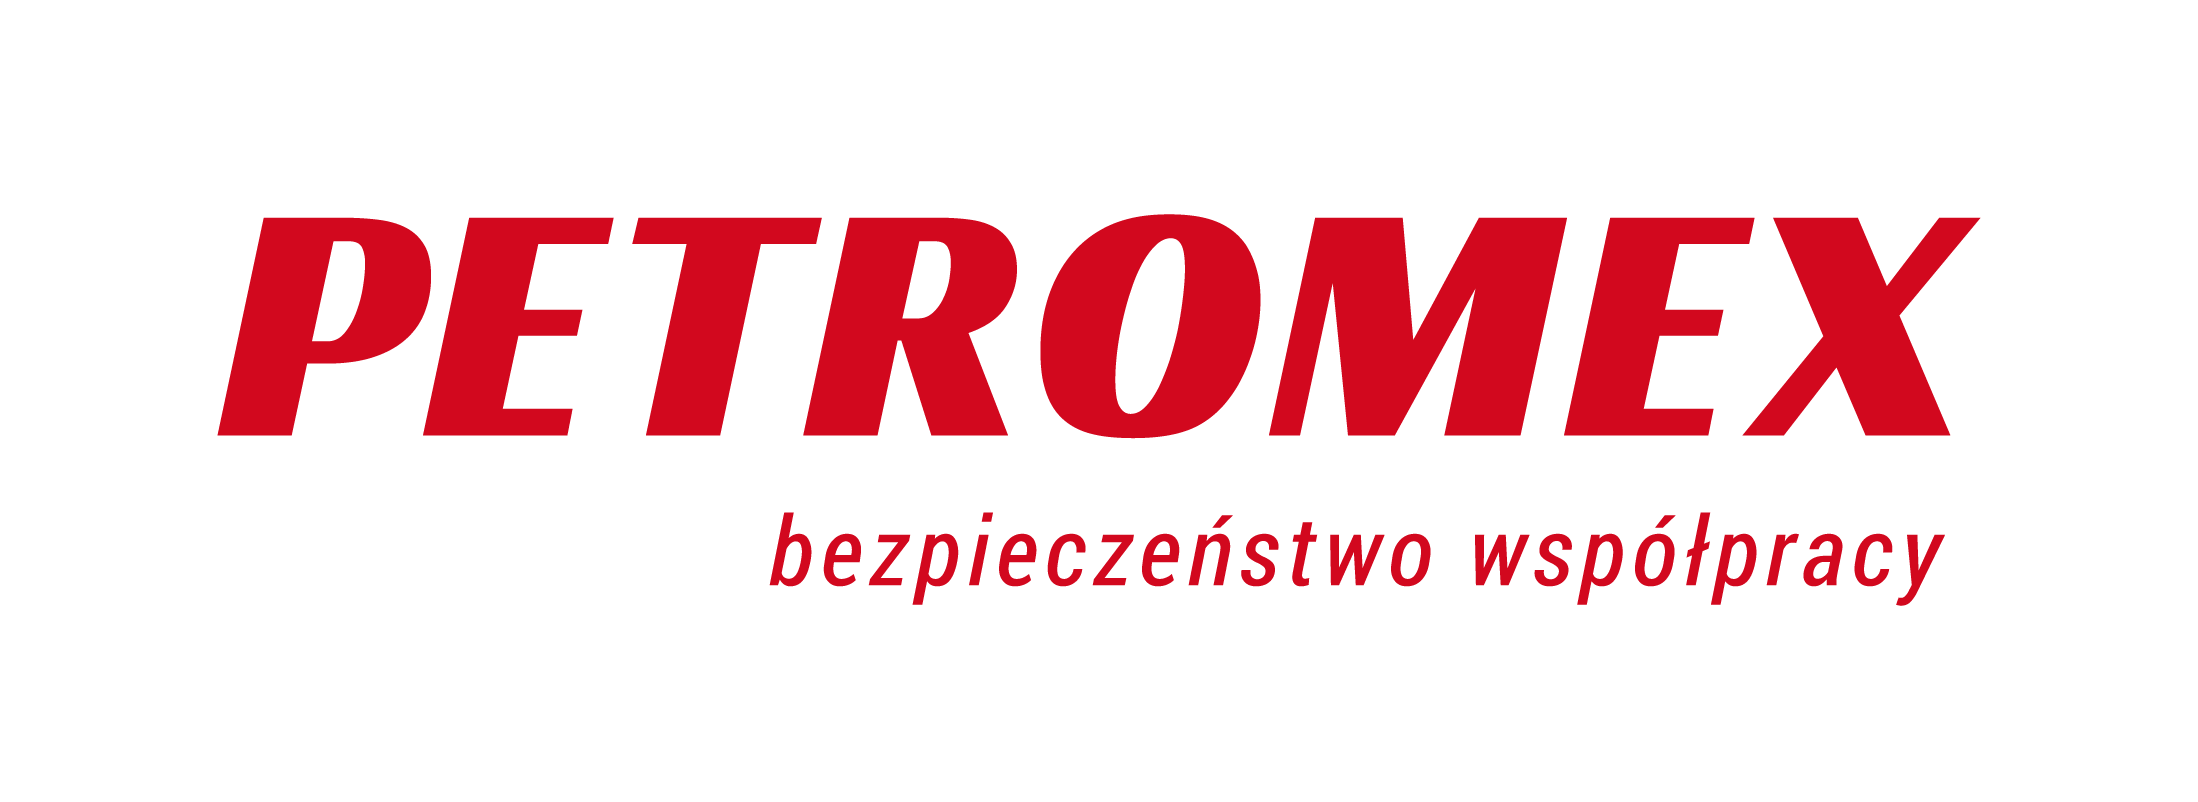 petromex logo slogan red